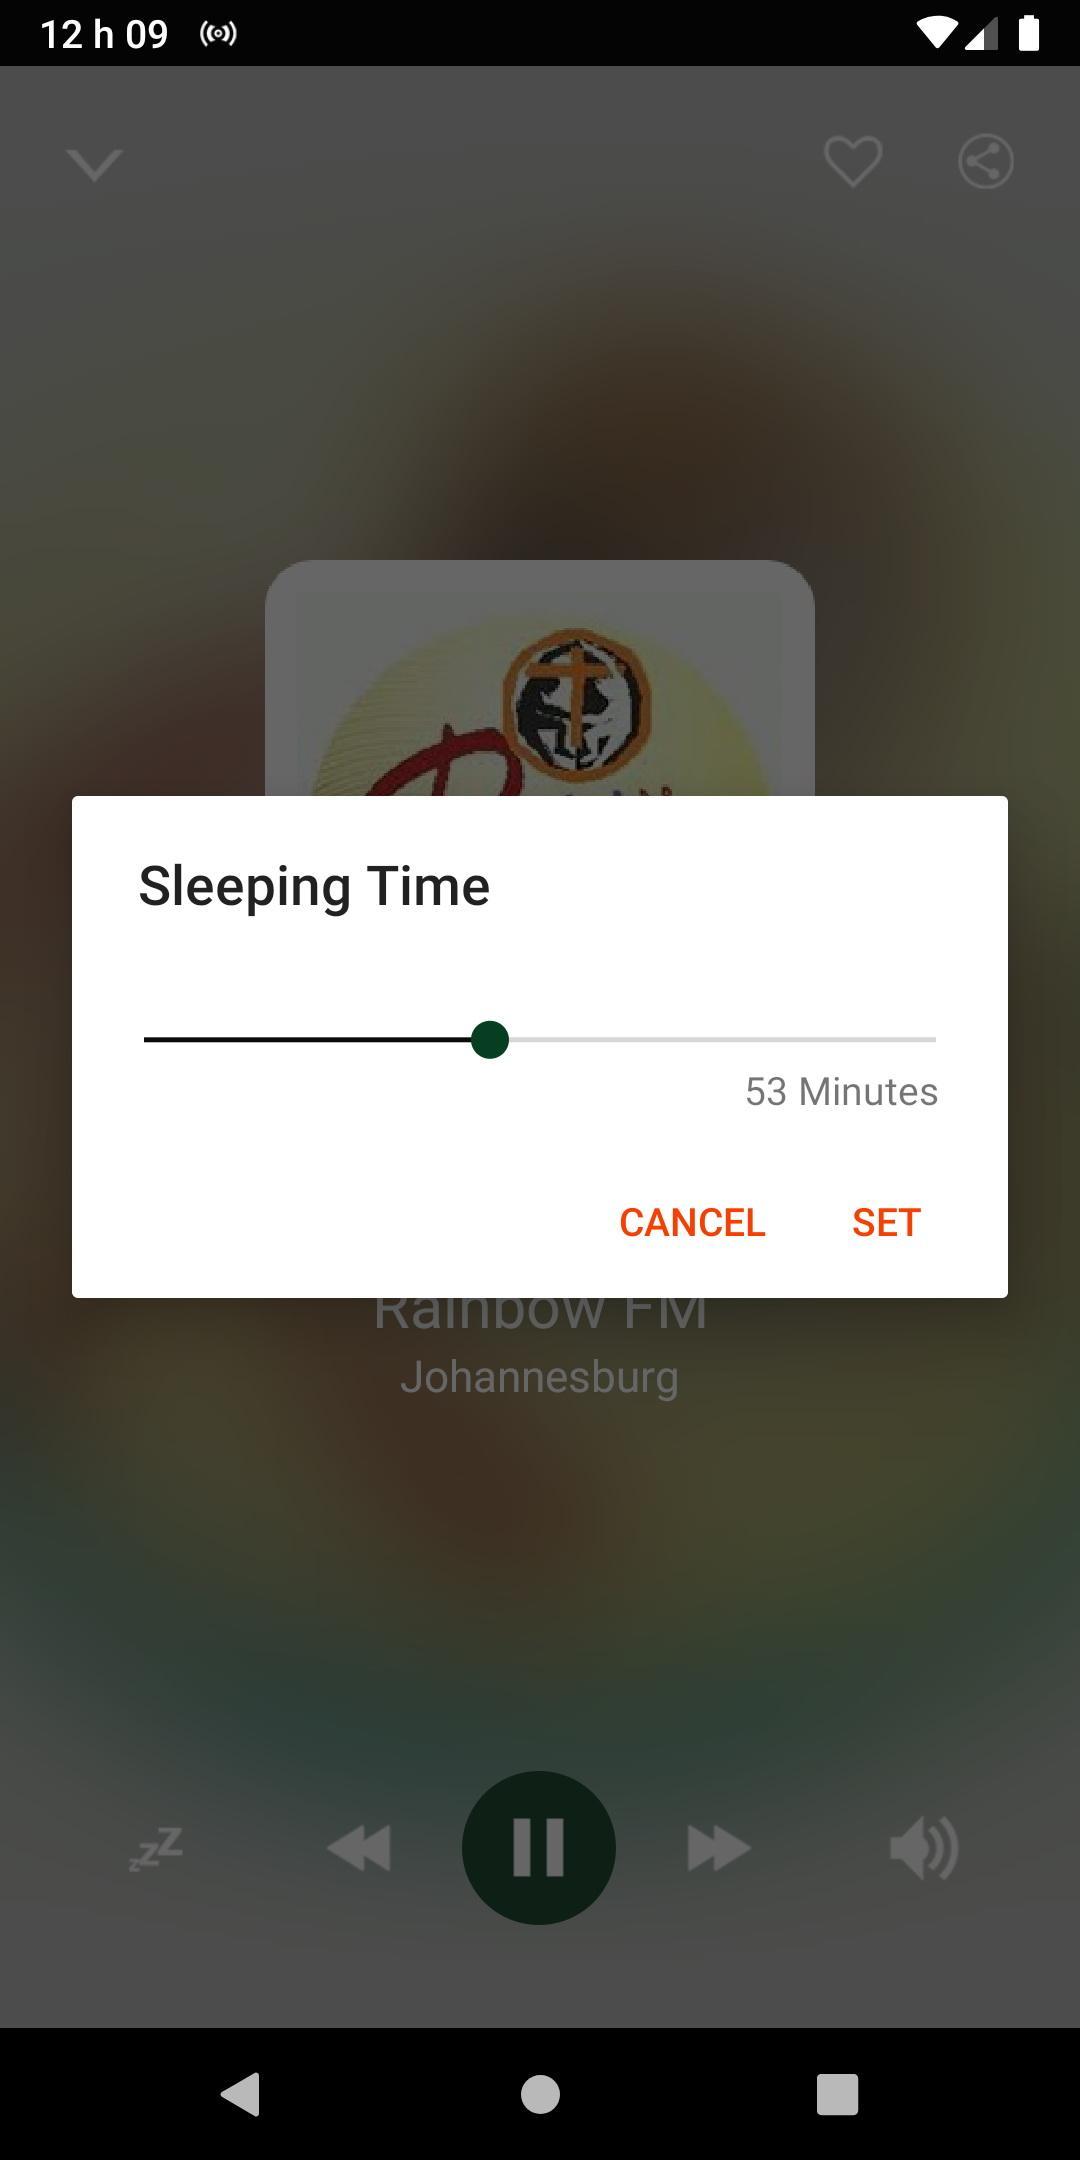 Johannesburg Radio Stations - South Africa 6.0.1 Screenshot 5